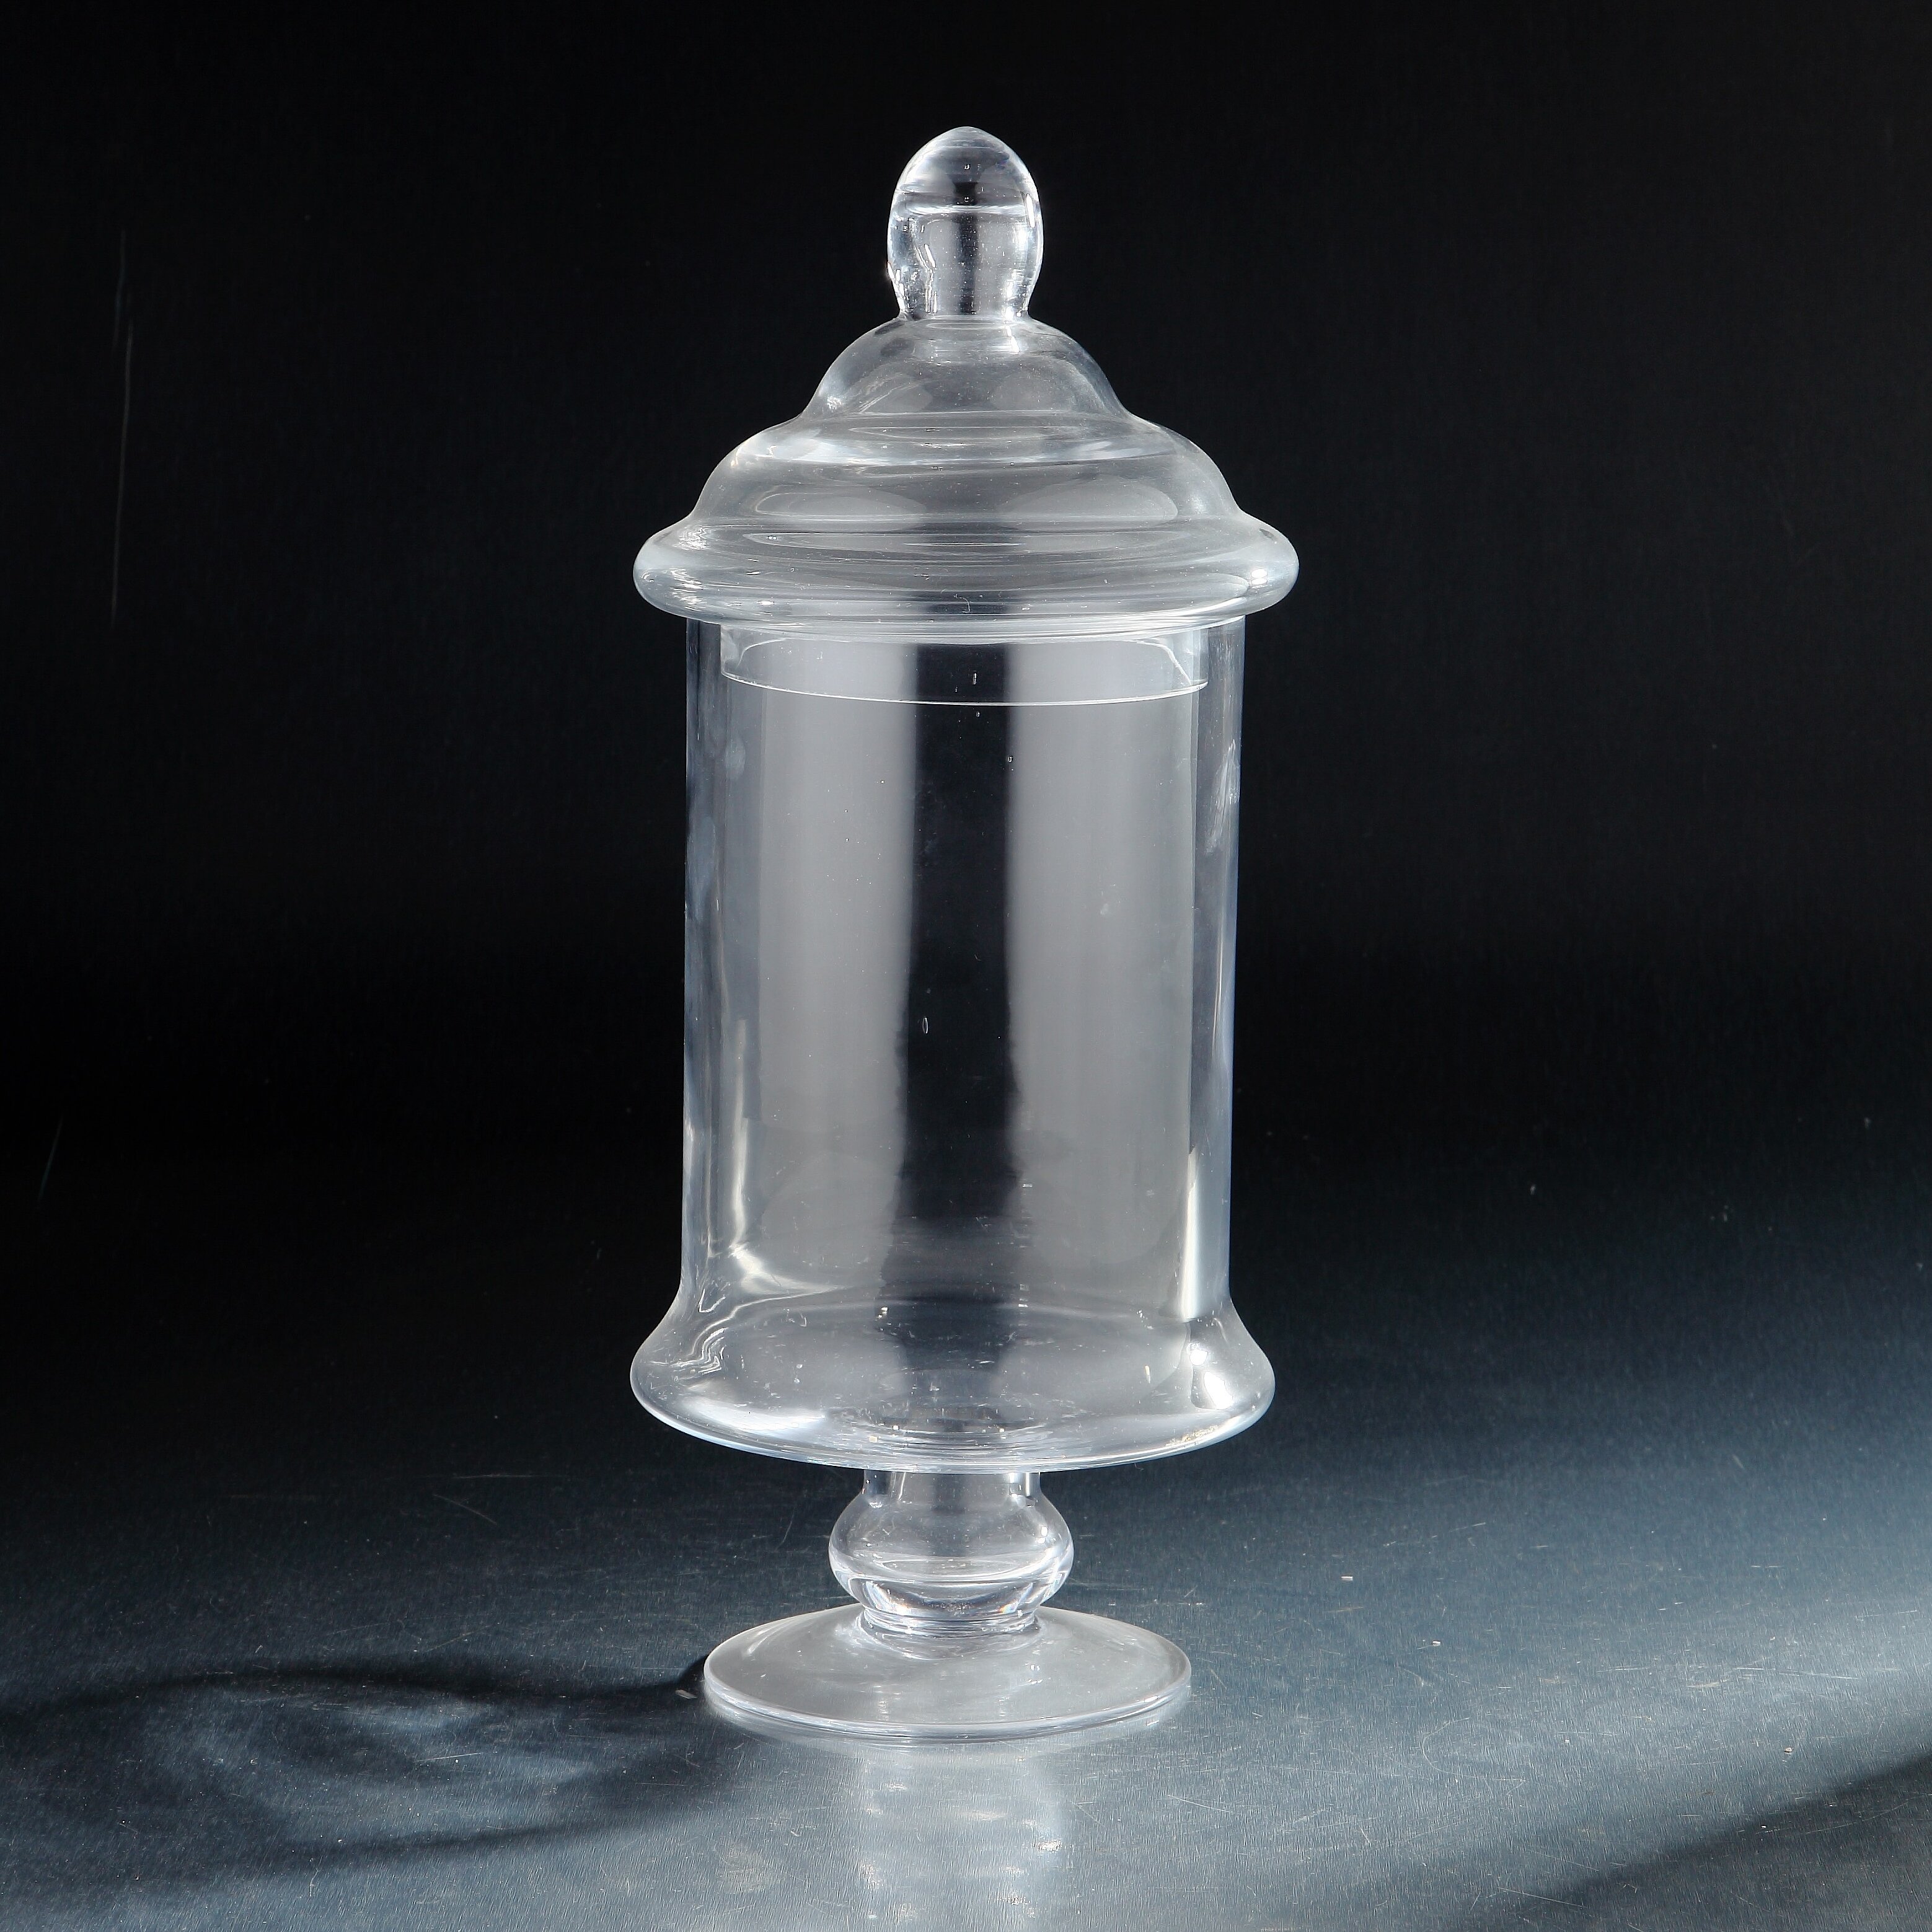 Ashland Glass Apothecary Jar